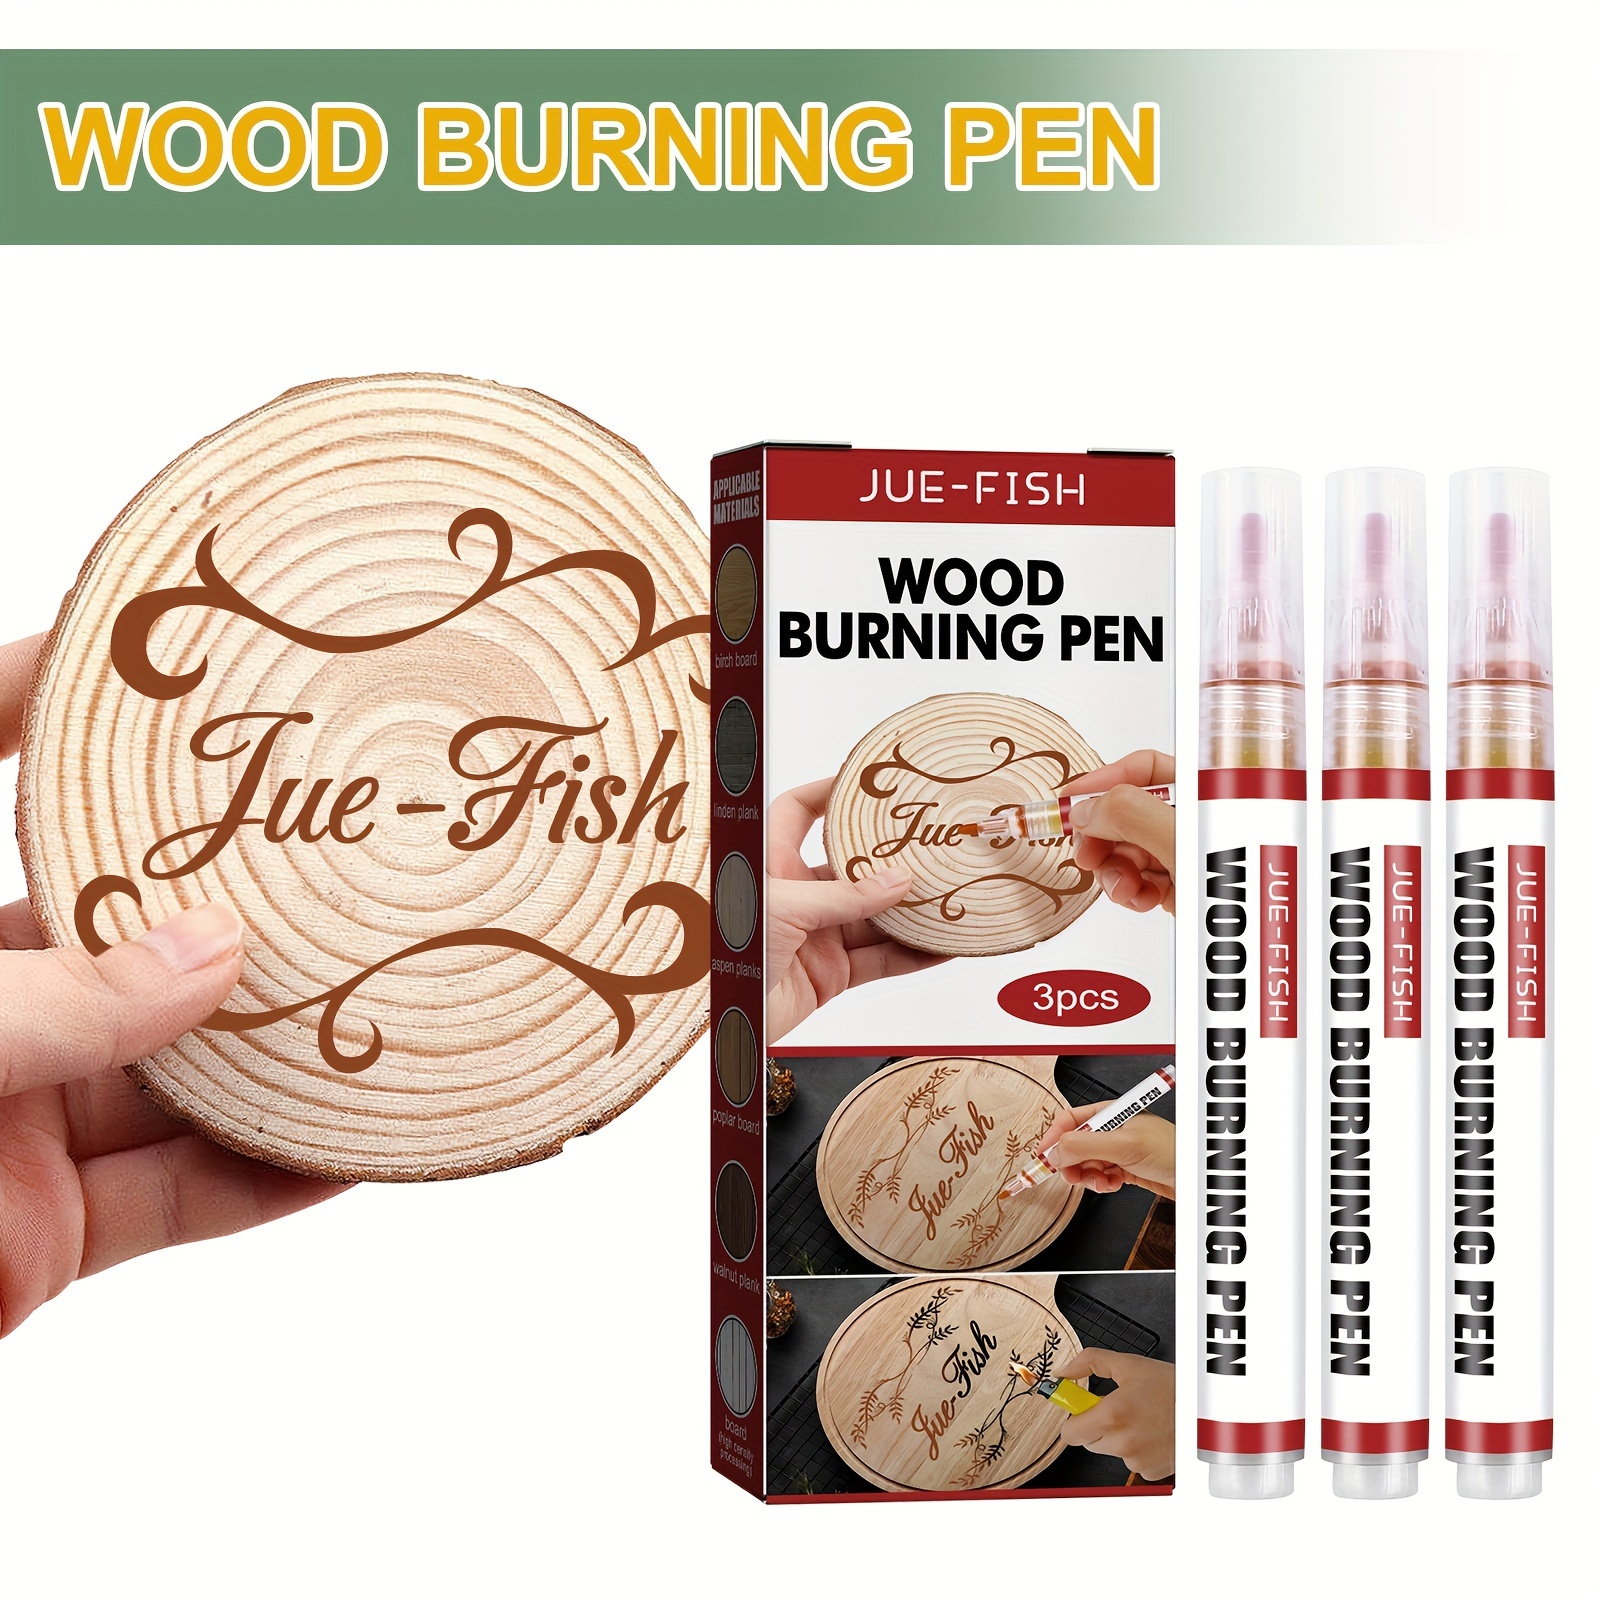 Wood Burning Paste Heat Sensitive Wood Burning Gel, Professional